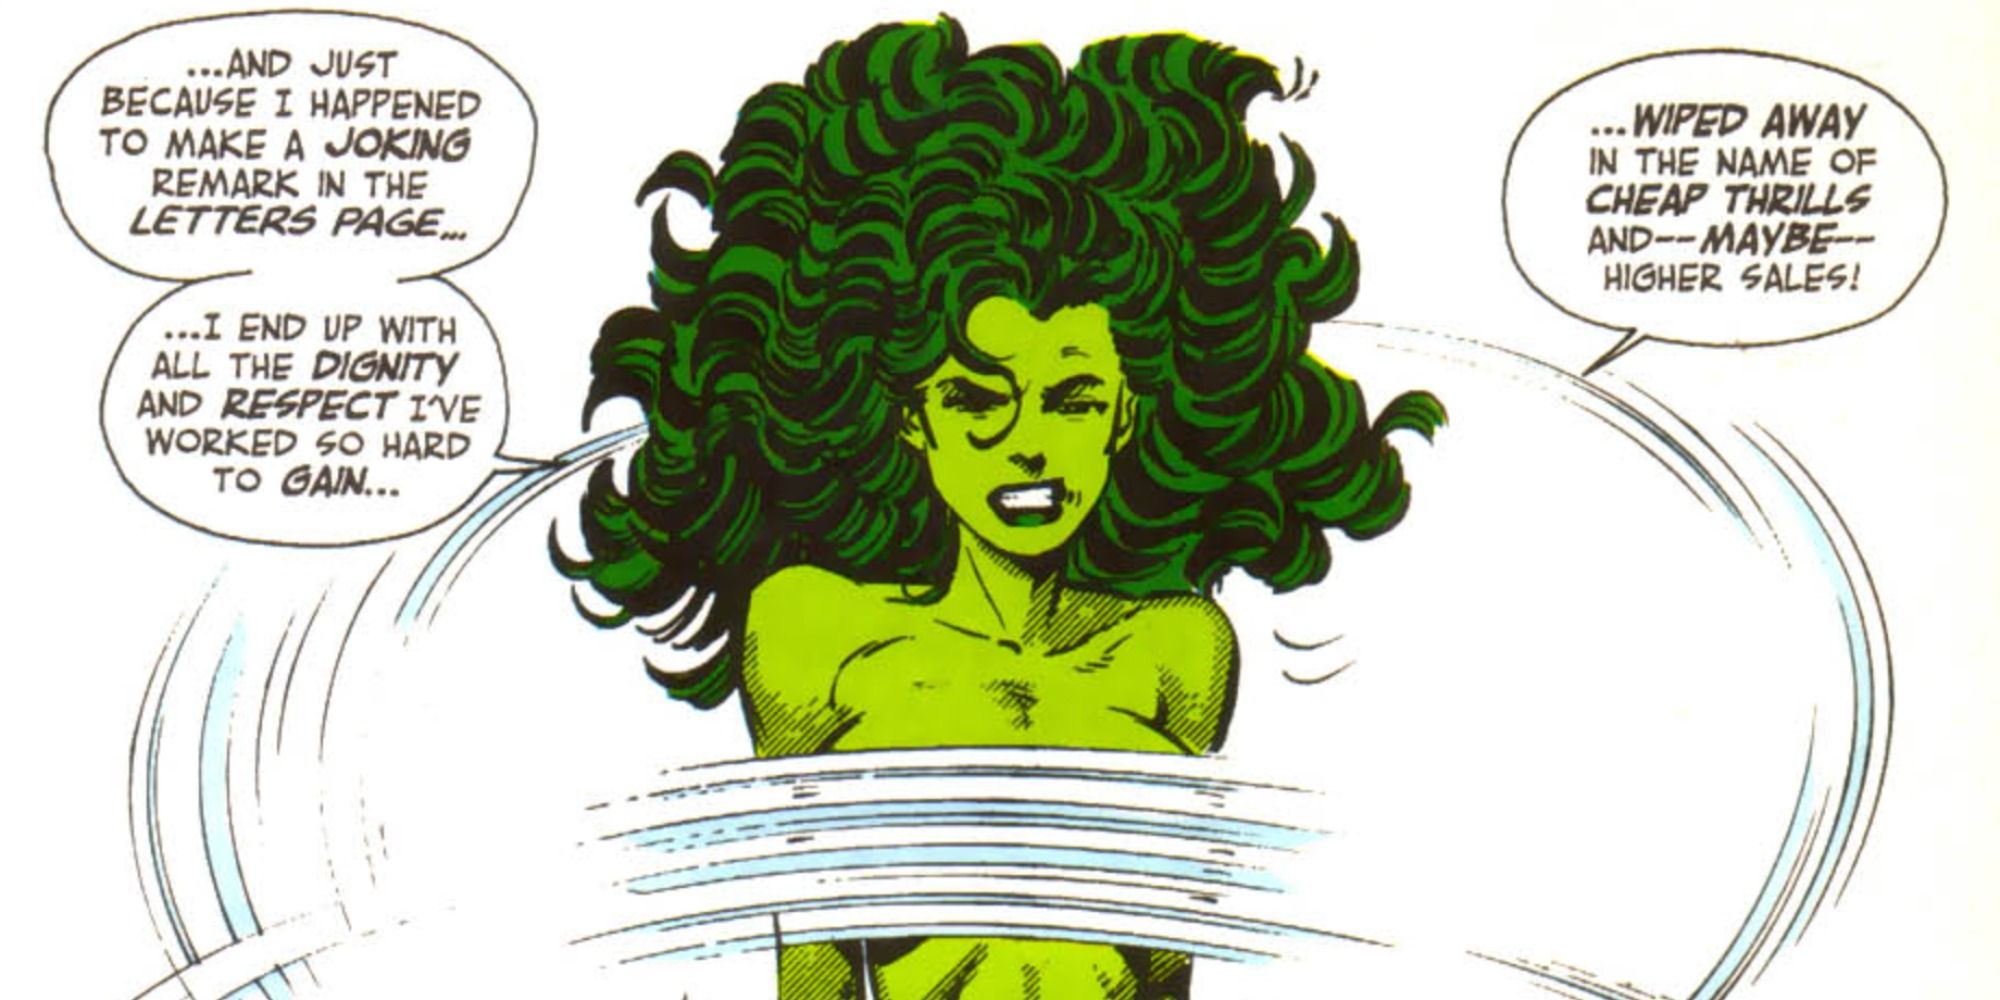 She-Hulk jumps rope in Marvel Comics.